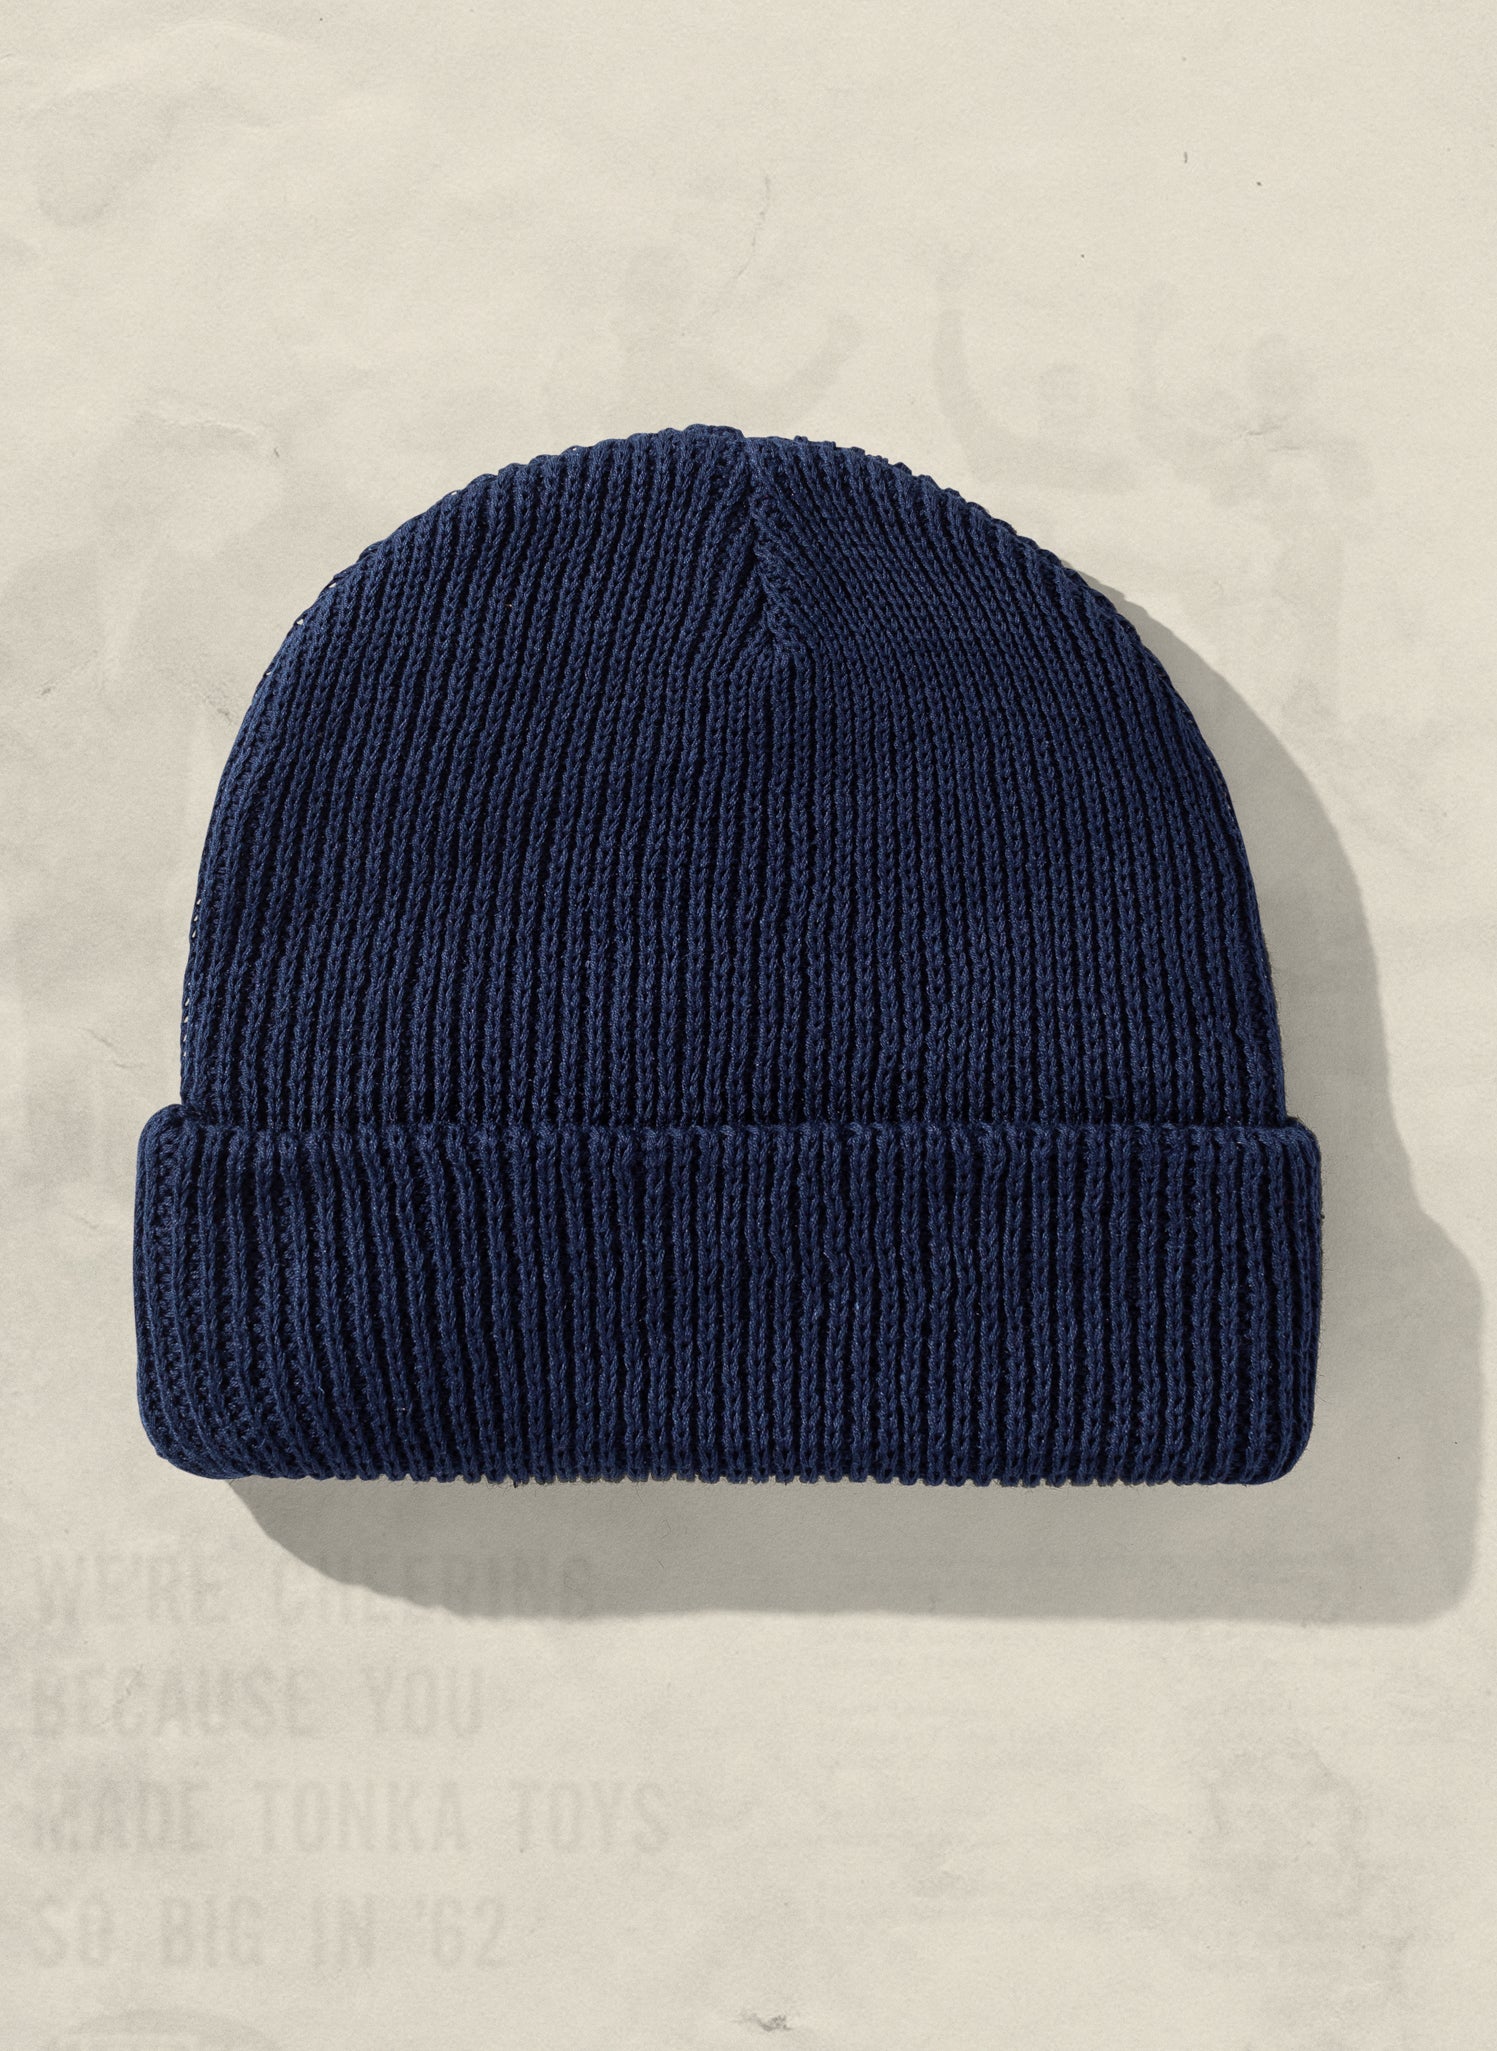 Weld Mfg Hemp Slacker Knit Ribbed Beanie Hat - Vintage Inspired Warm Comfortable Hat - Navy